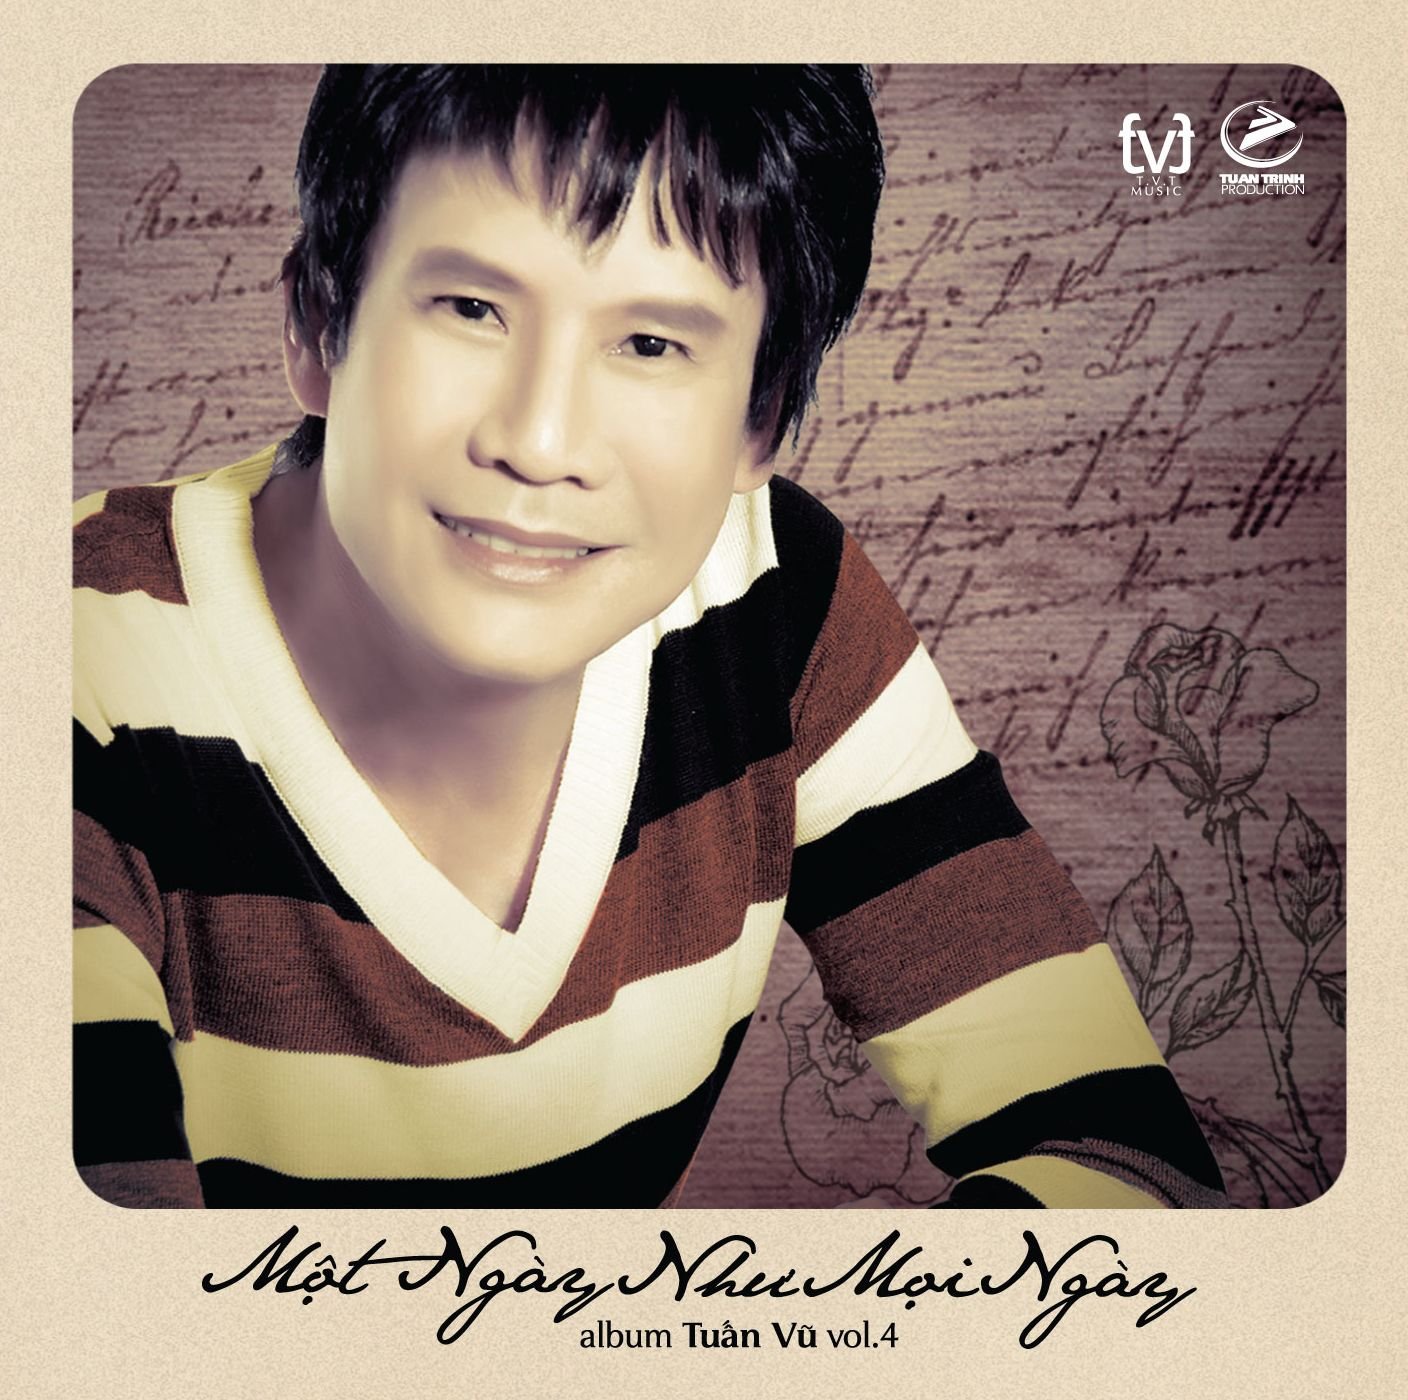 singer, CD ORIGINAL.BRAND-NEW - CD MOT NGAY NHU MOI NGAY album ca si Tuan Vu Vol.4 ORIGINAL - Amazon.com Music